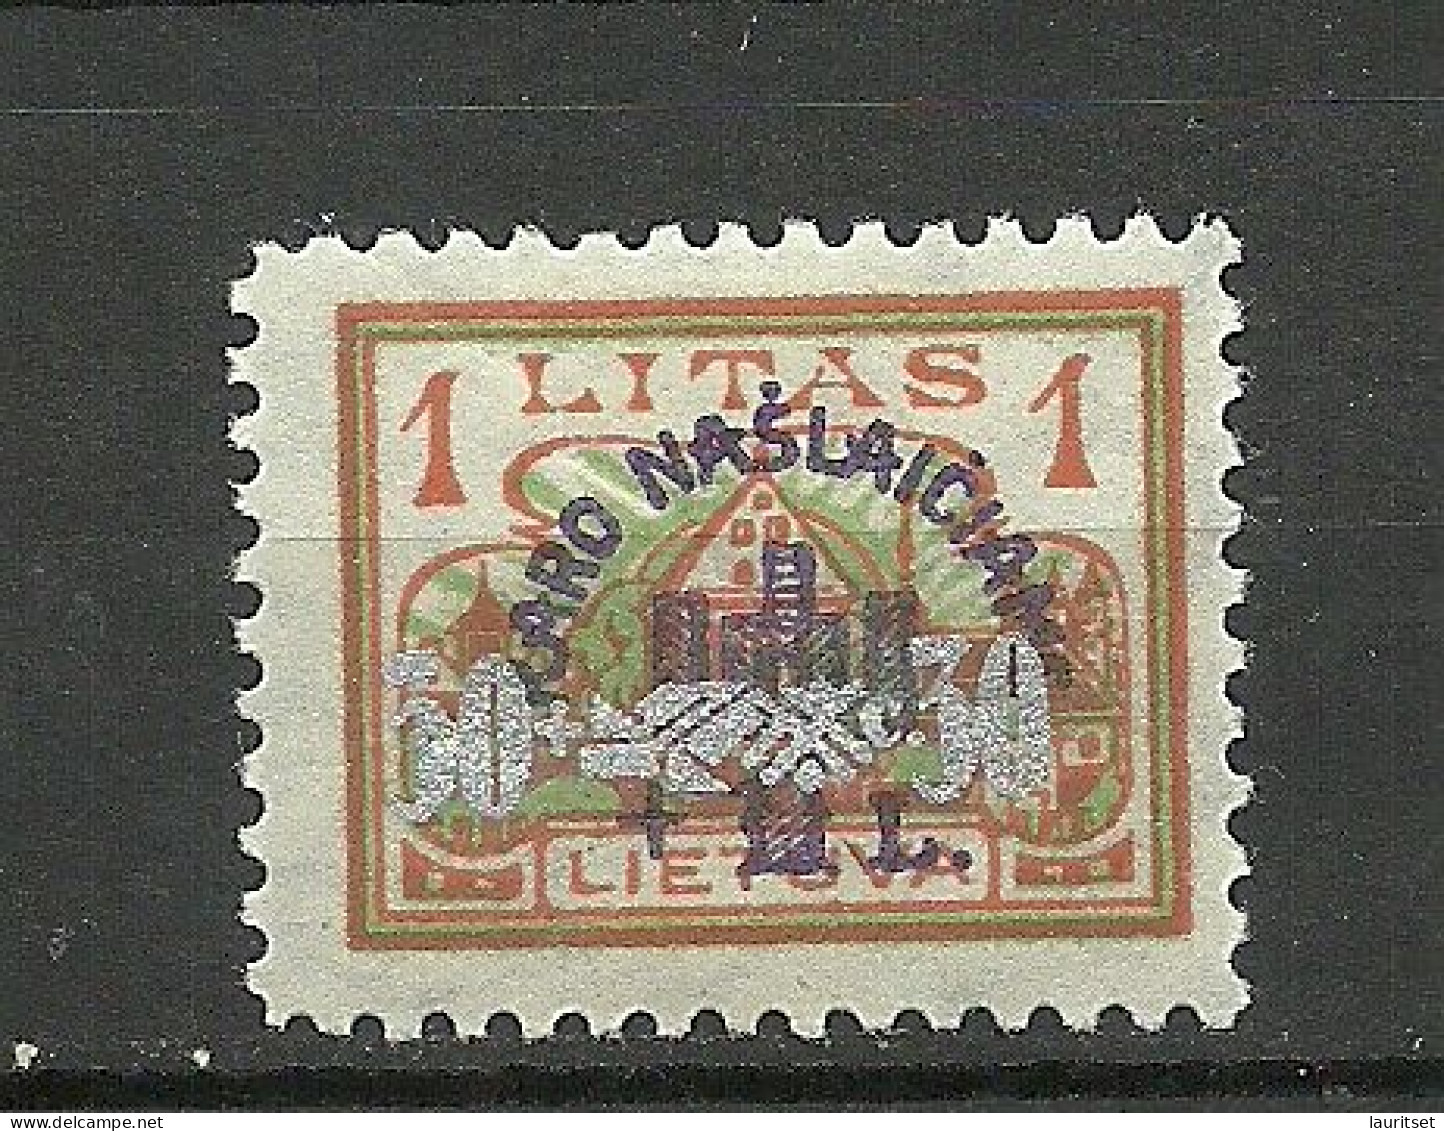 LITAUEN Lithuania 1926 Michel 258 * - Litauen